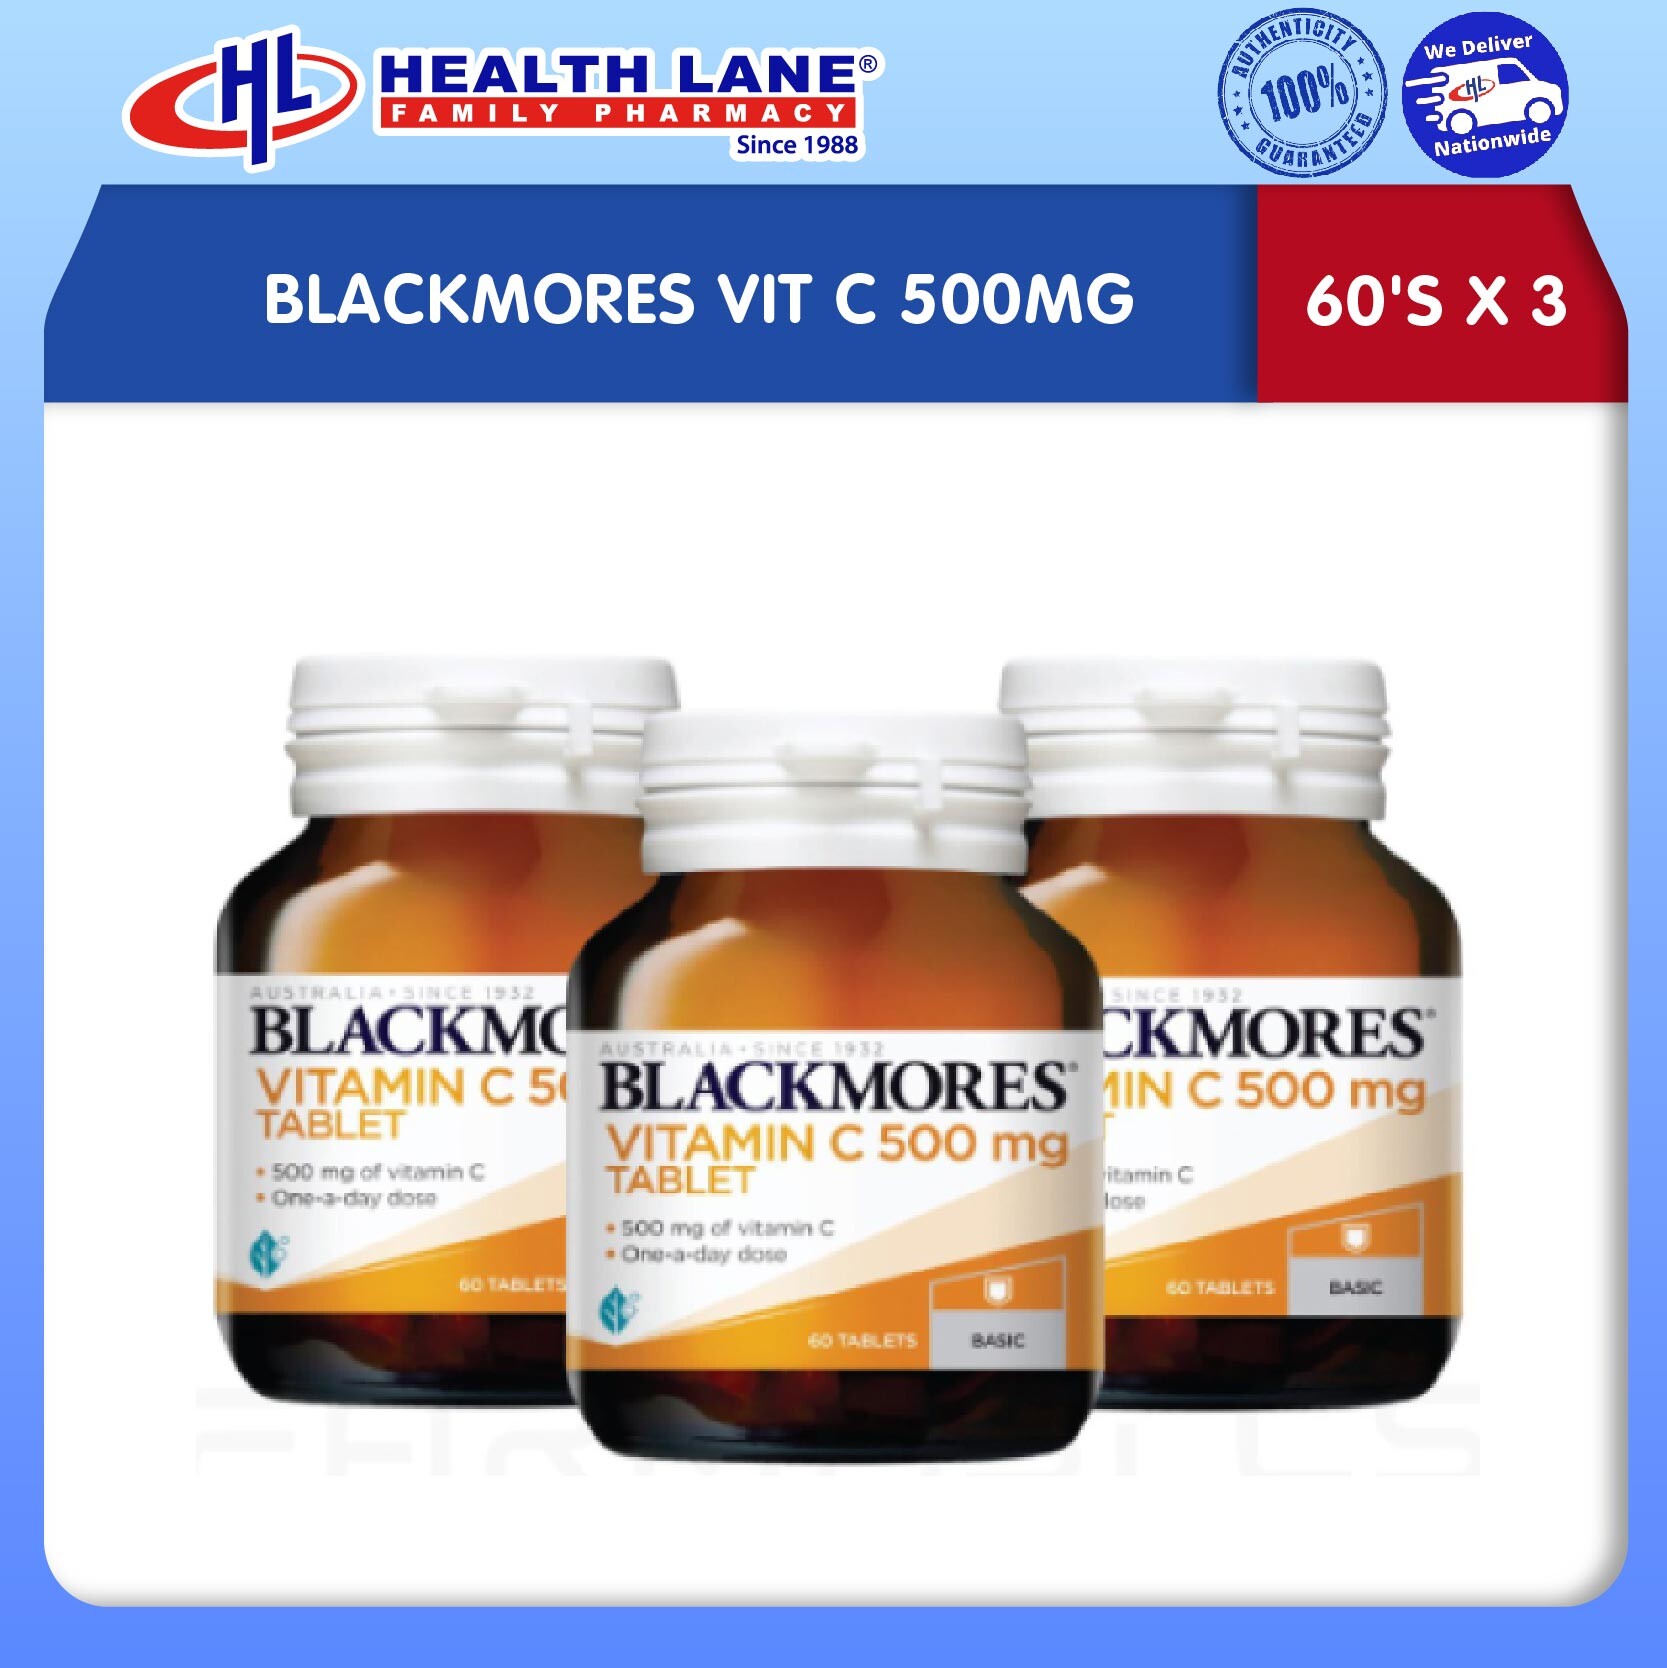 BLACKMORES VIT C 500MG 60'S X 3